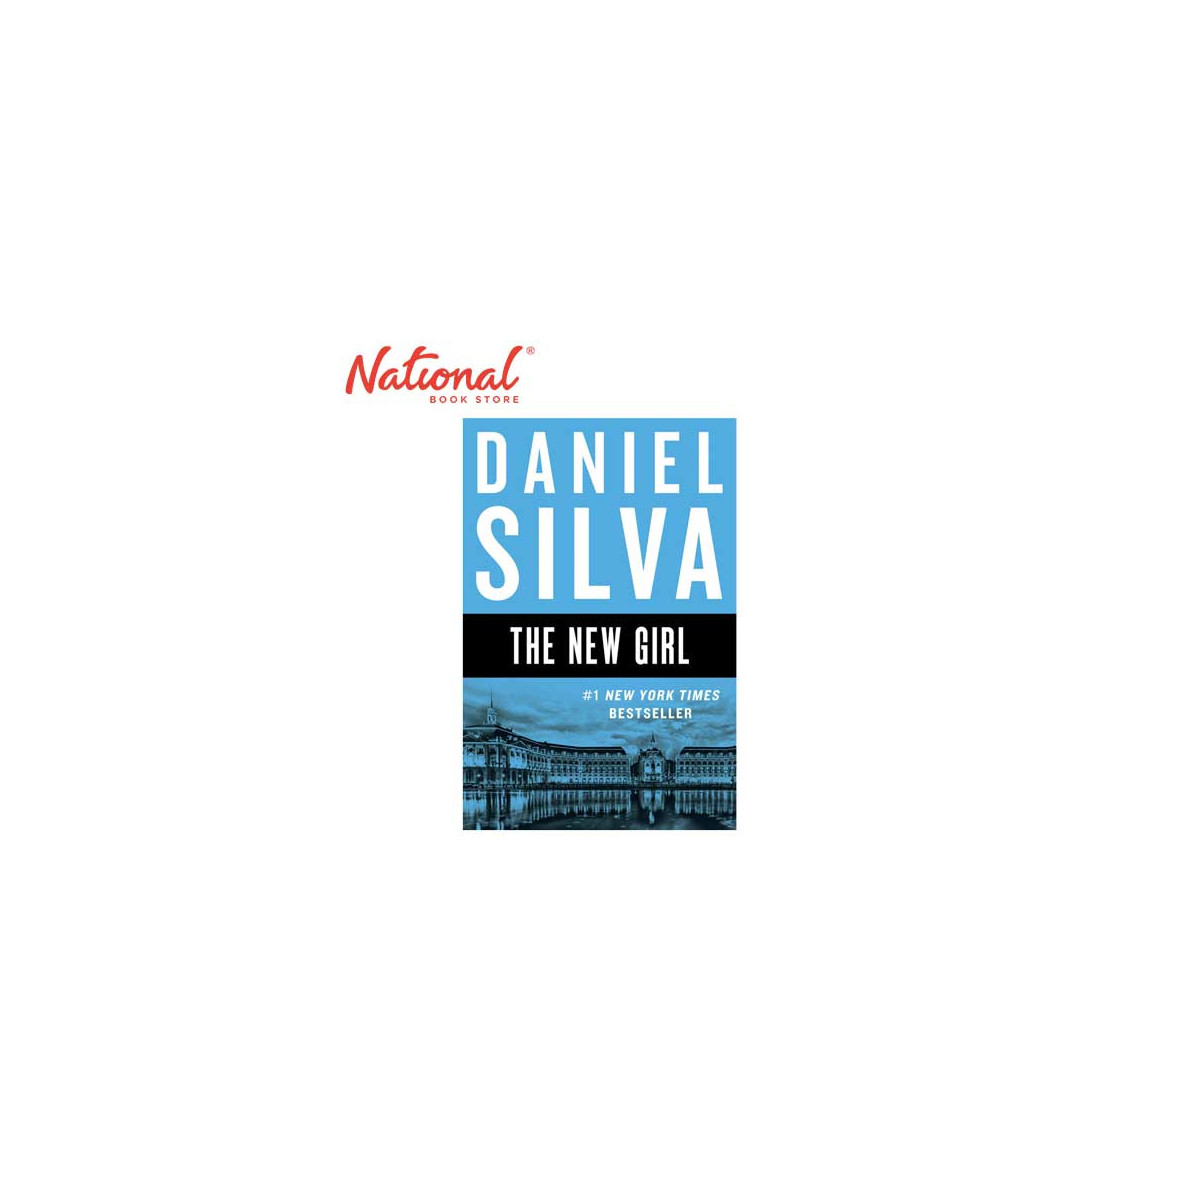 The New Girl: A Novel by Daniel Silva - Trade Paperback - Thriller - Mystery - Suspense